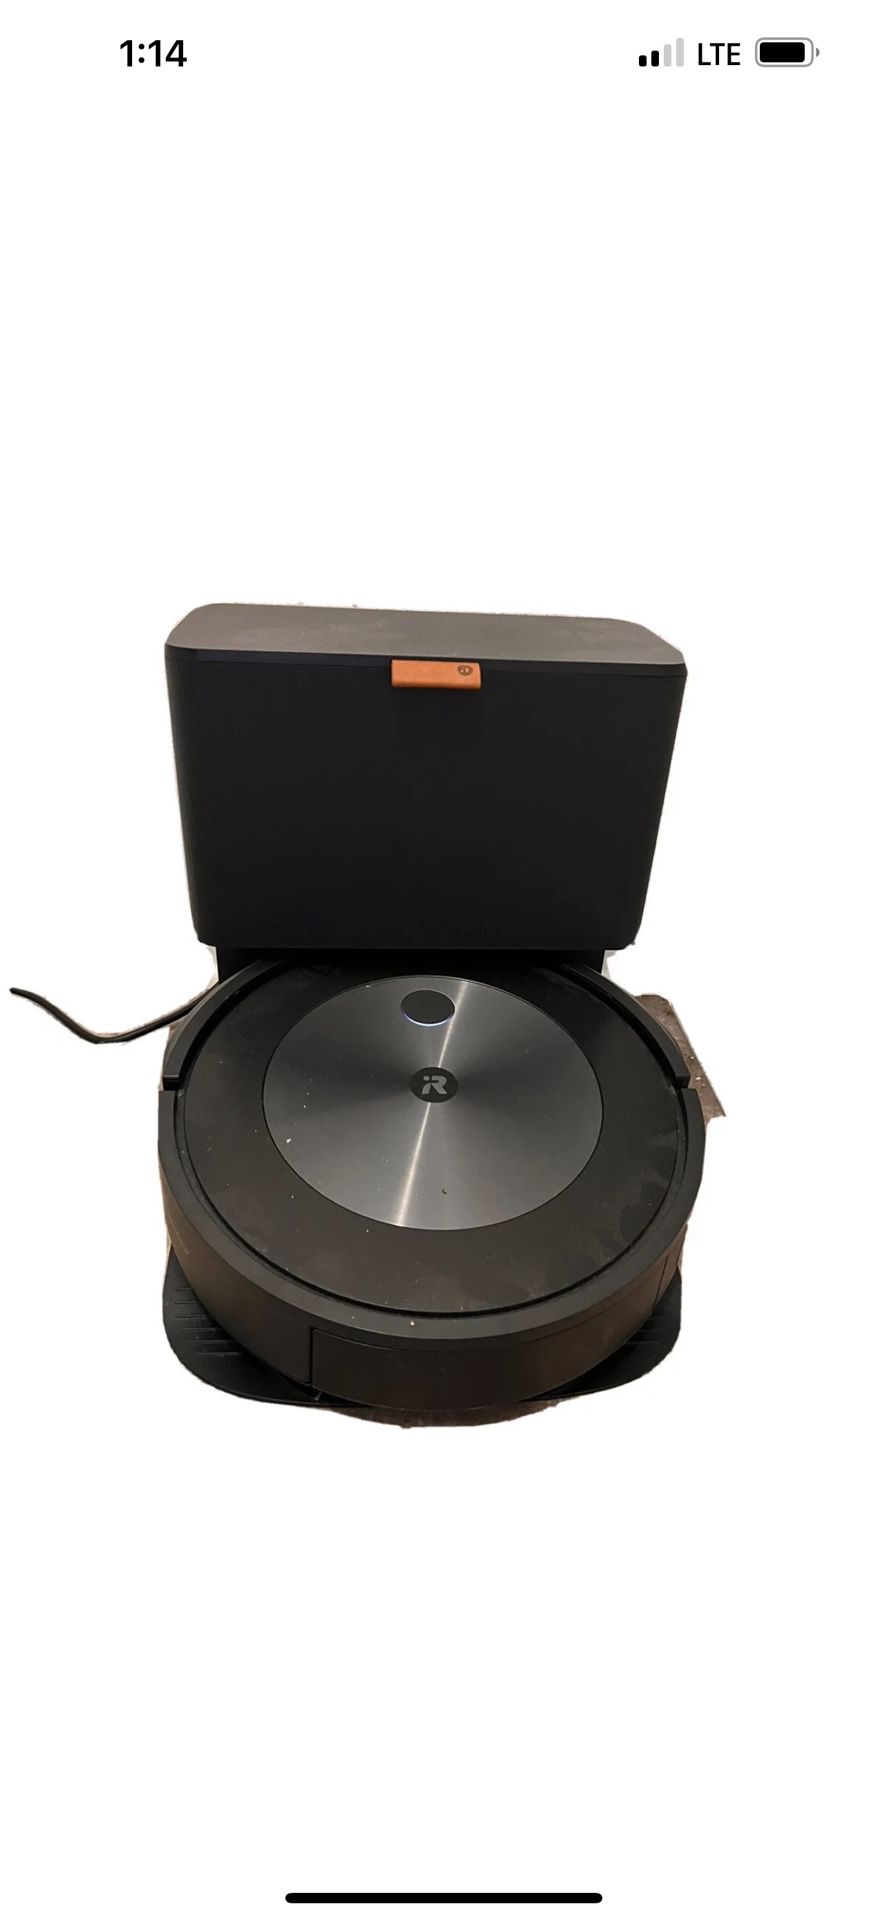 iRobot Roomba j7+ Self-Emptying Robotic Vacuum Cleaner - Graphite